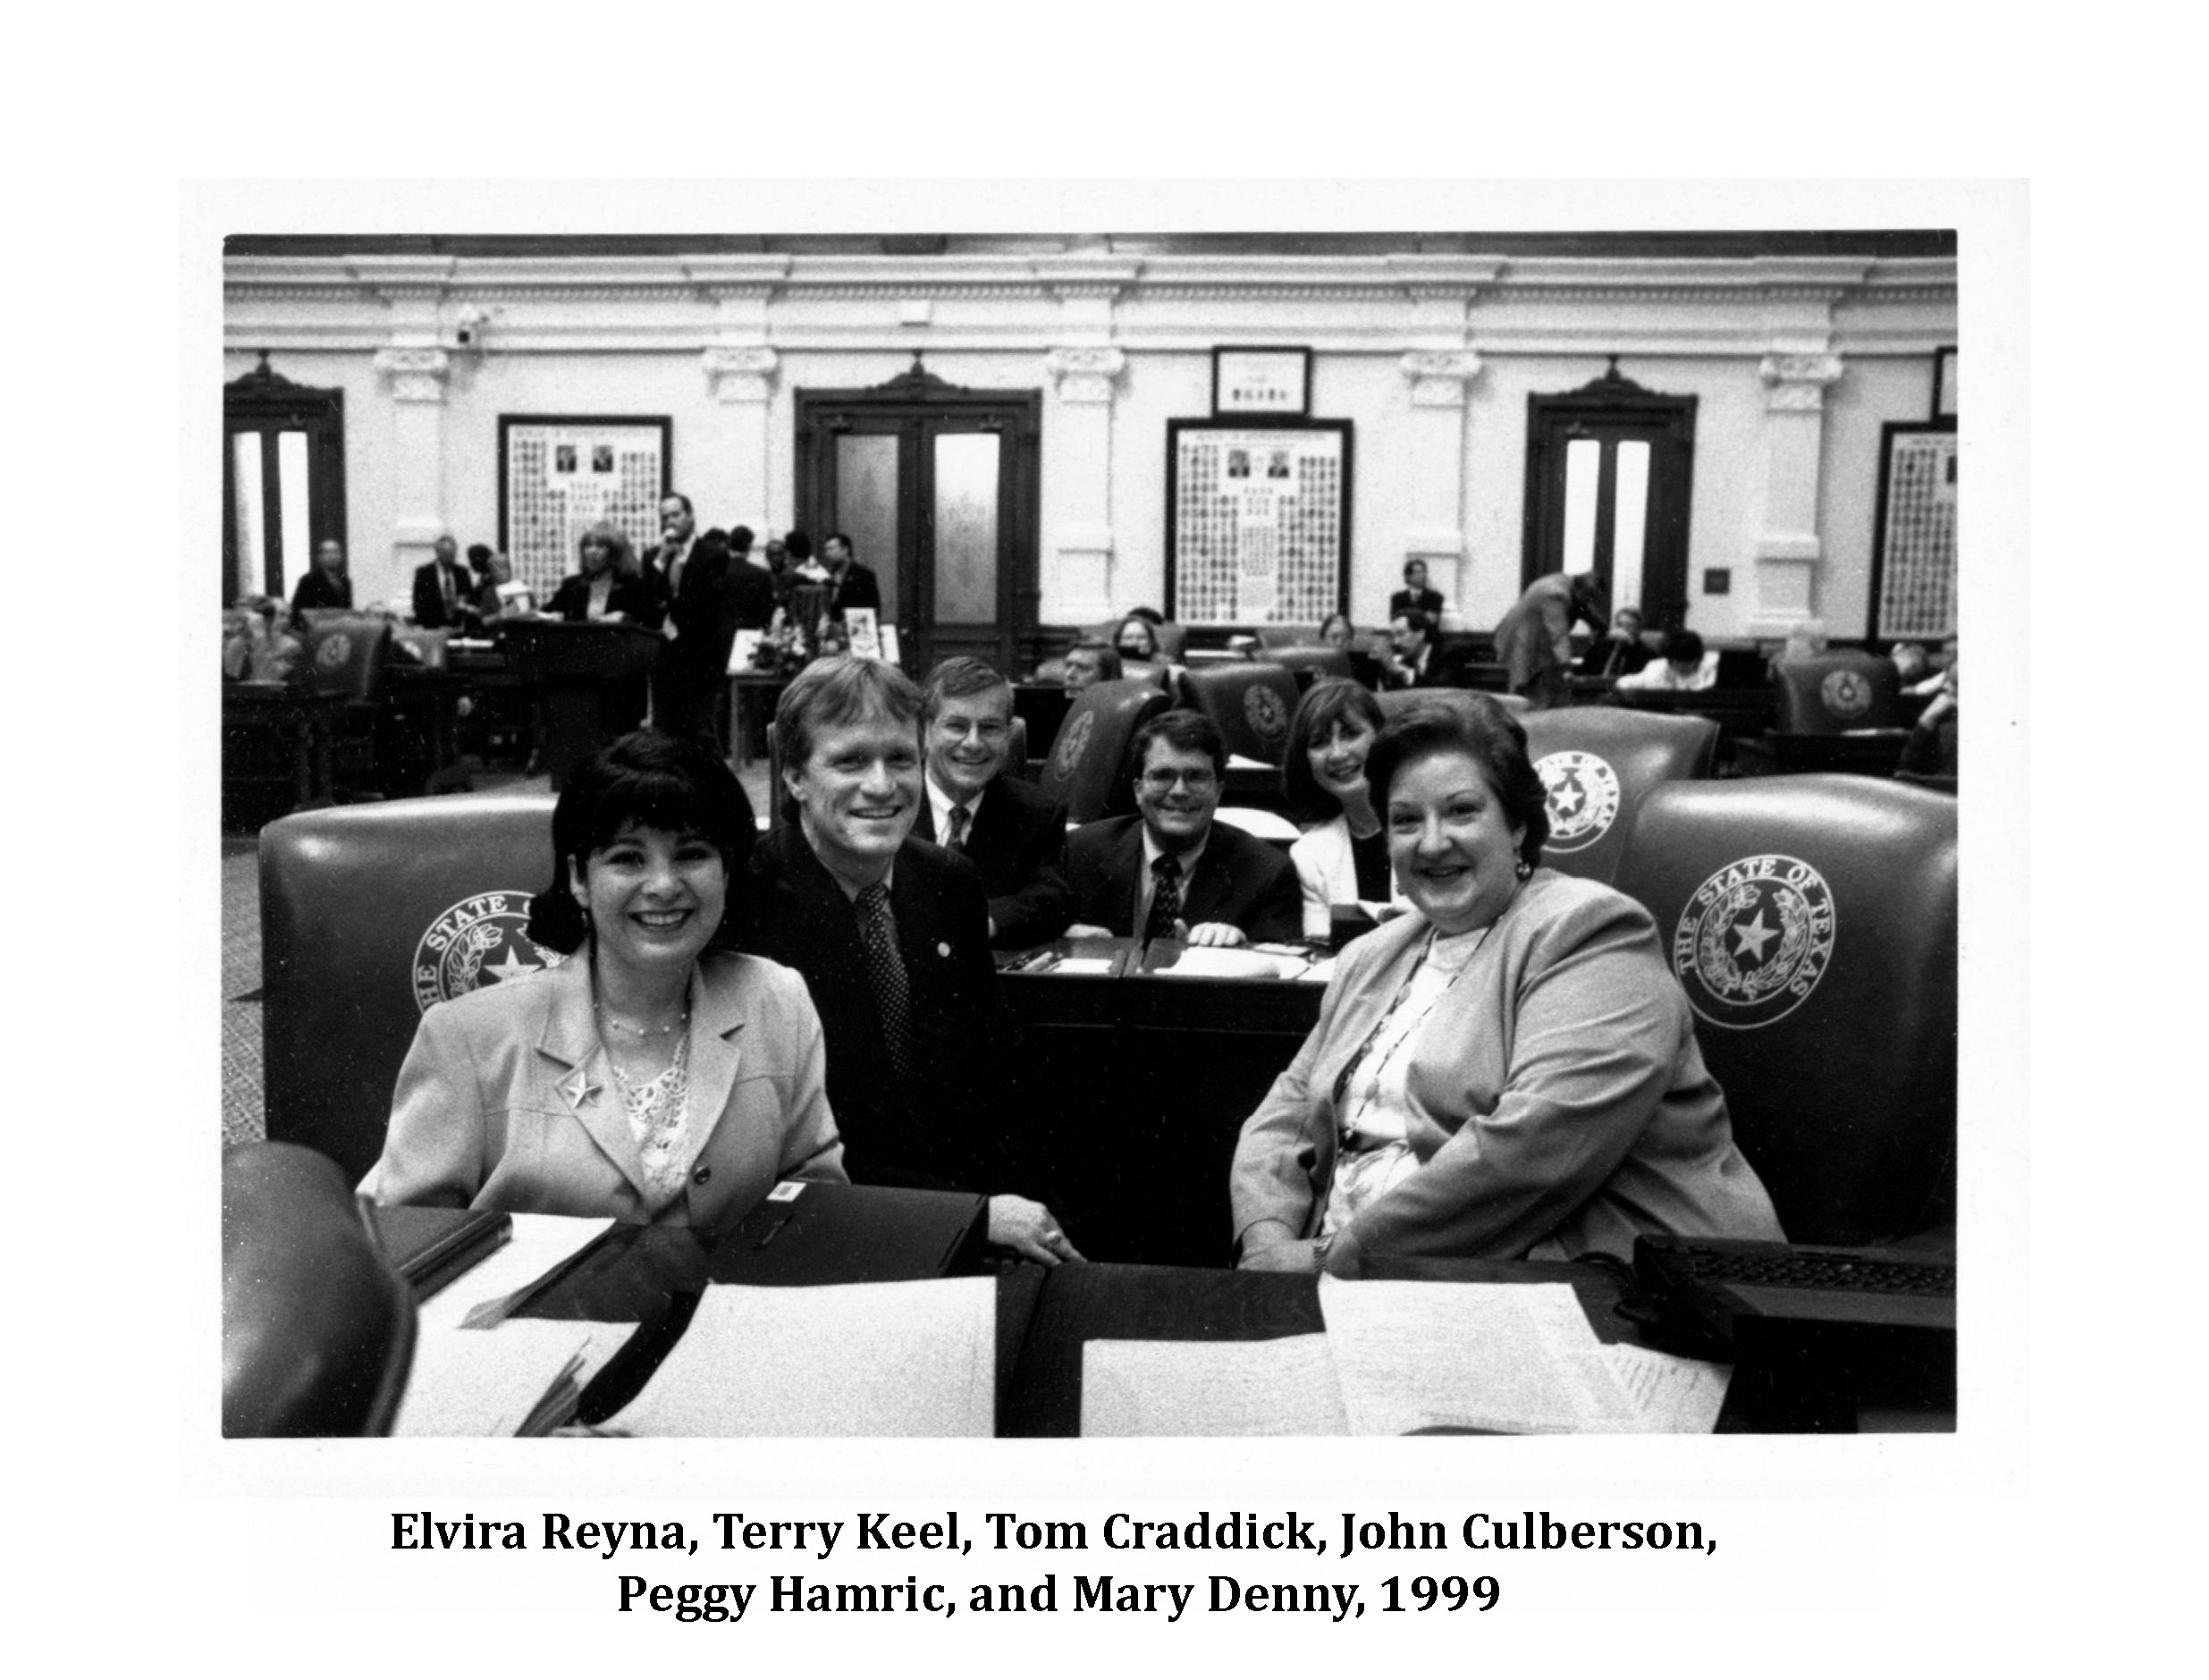 Elvira Reyna, Terry Keel, Tom Craddick, John Culberson, Peggy Hamric, and Mary Denny in the Texas House of Representatives, 1999. Photo courtesy of Terry Keel